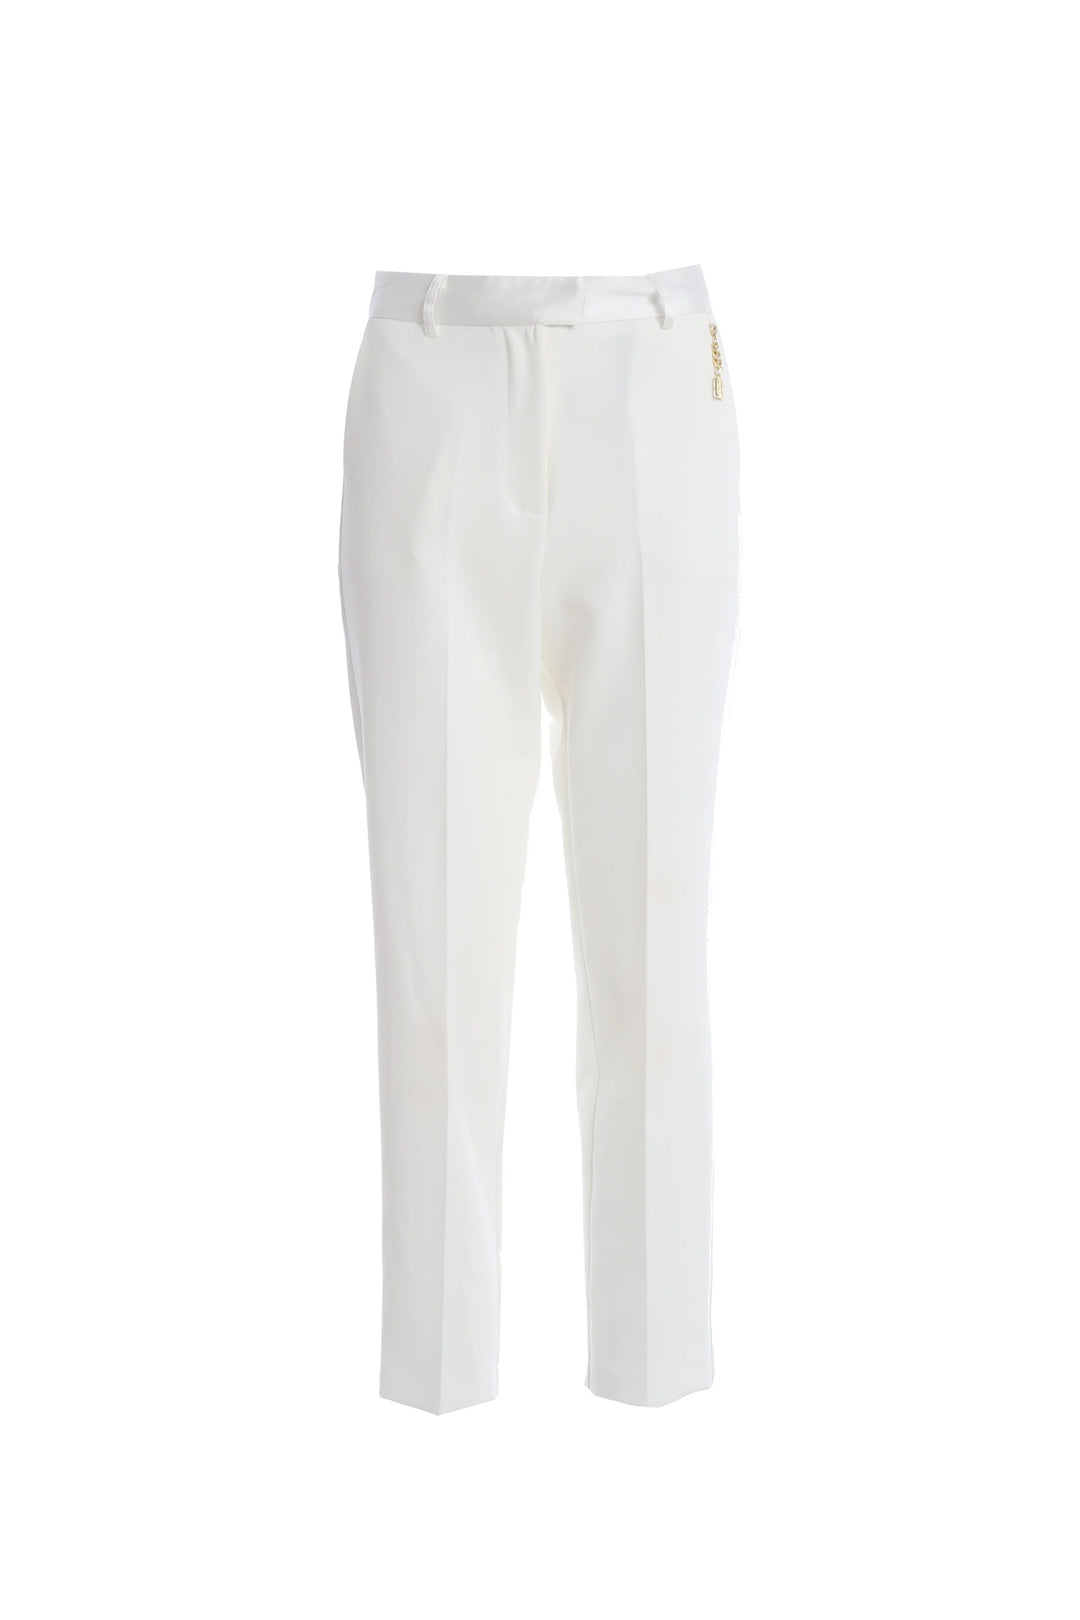 FRACOMINA Pantaloni a sigaretta eleganti bianchi - Mancinelli 1954